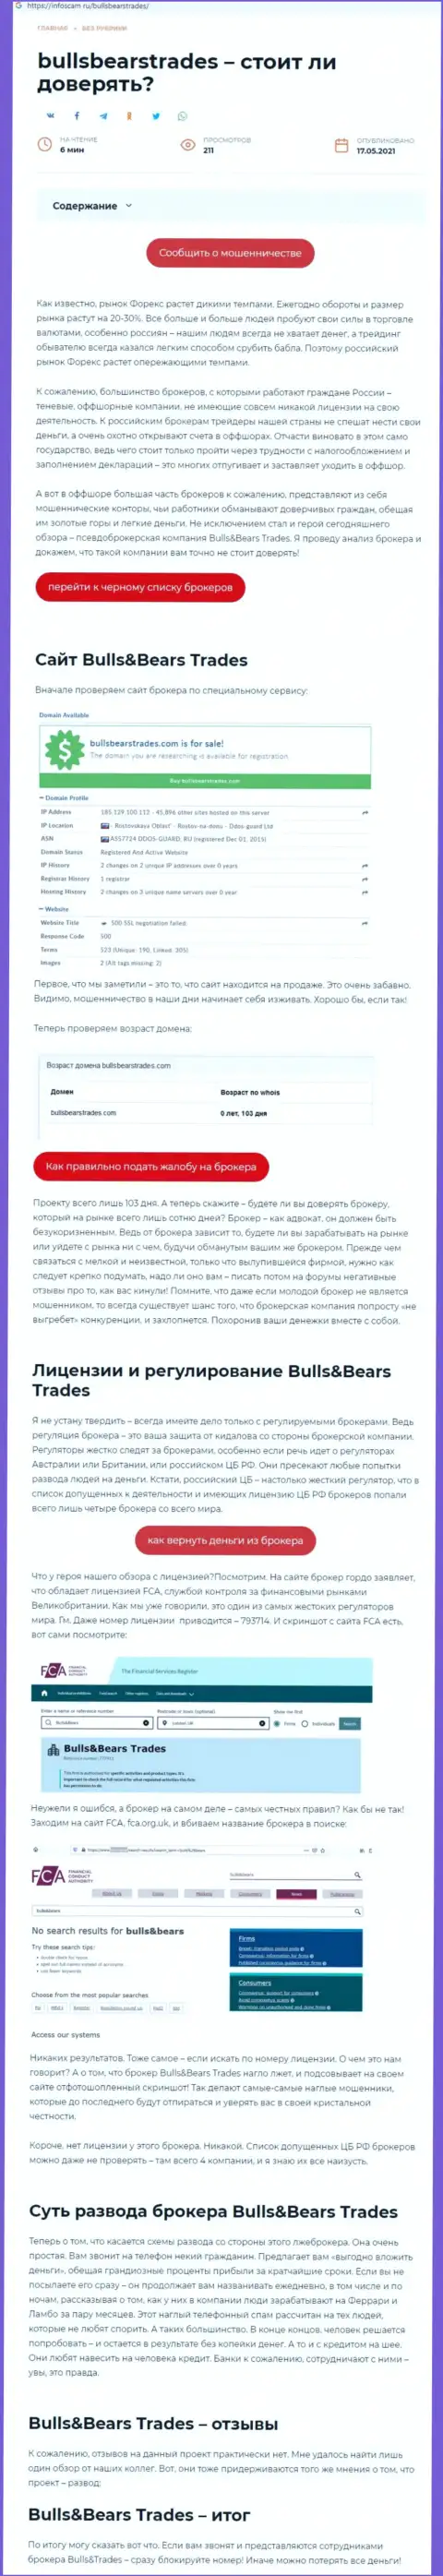 BullsBears Trades - это ЛОХОТРОНЩИК !!! Схемы грабежа (обзор афер)